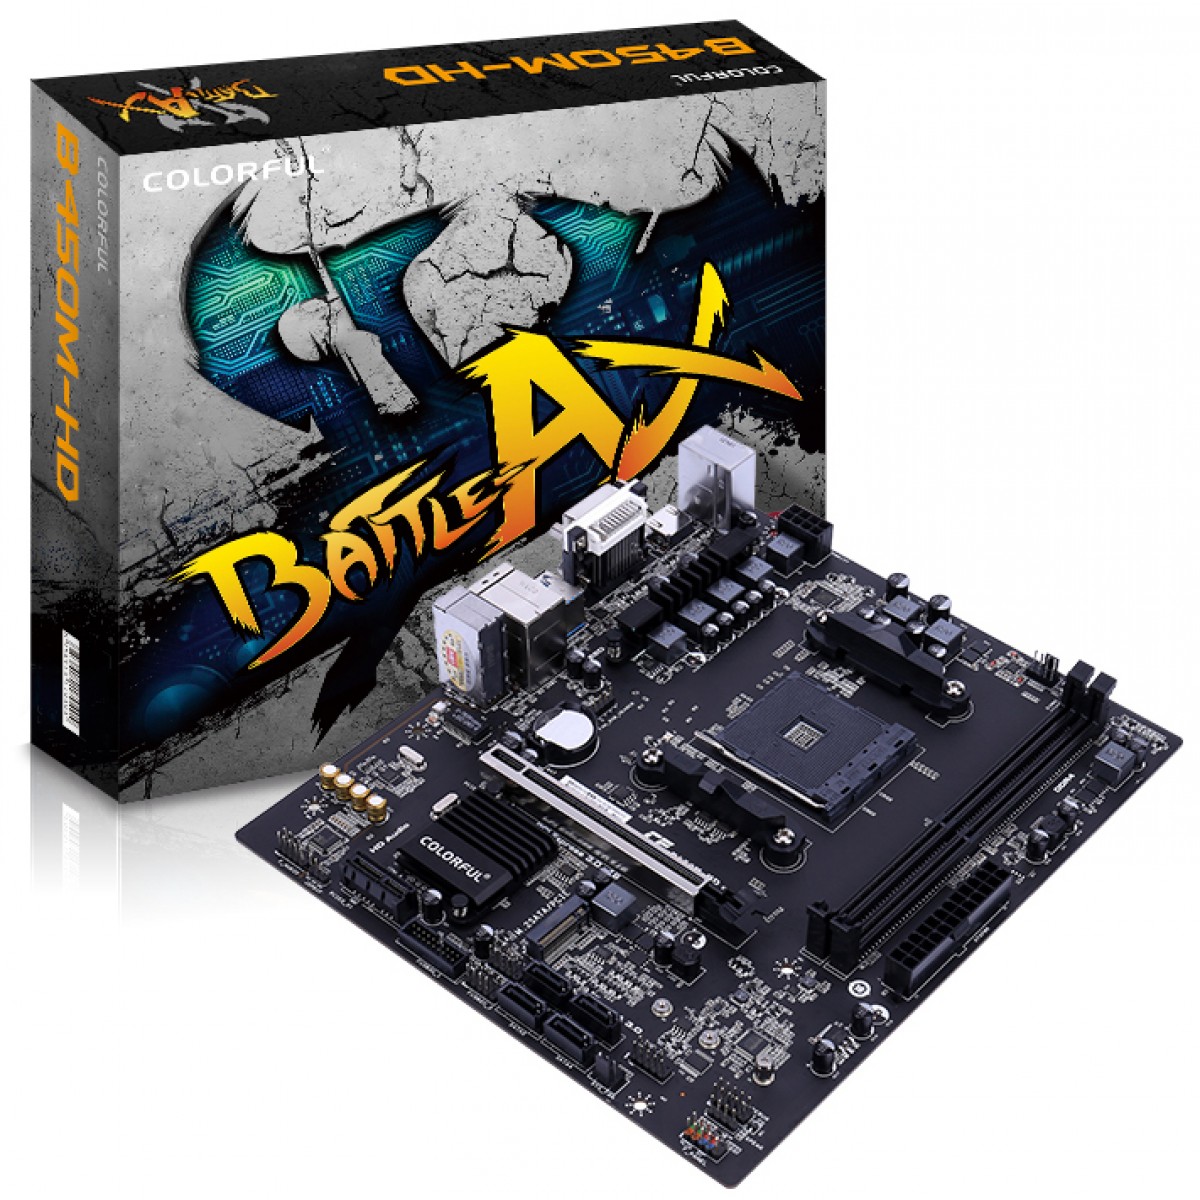 Placa Mãe Colorful Battle-AX B450M-HD V14, Chipset B450, AMD AM4, mATX, DDR4 - Open